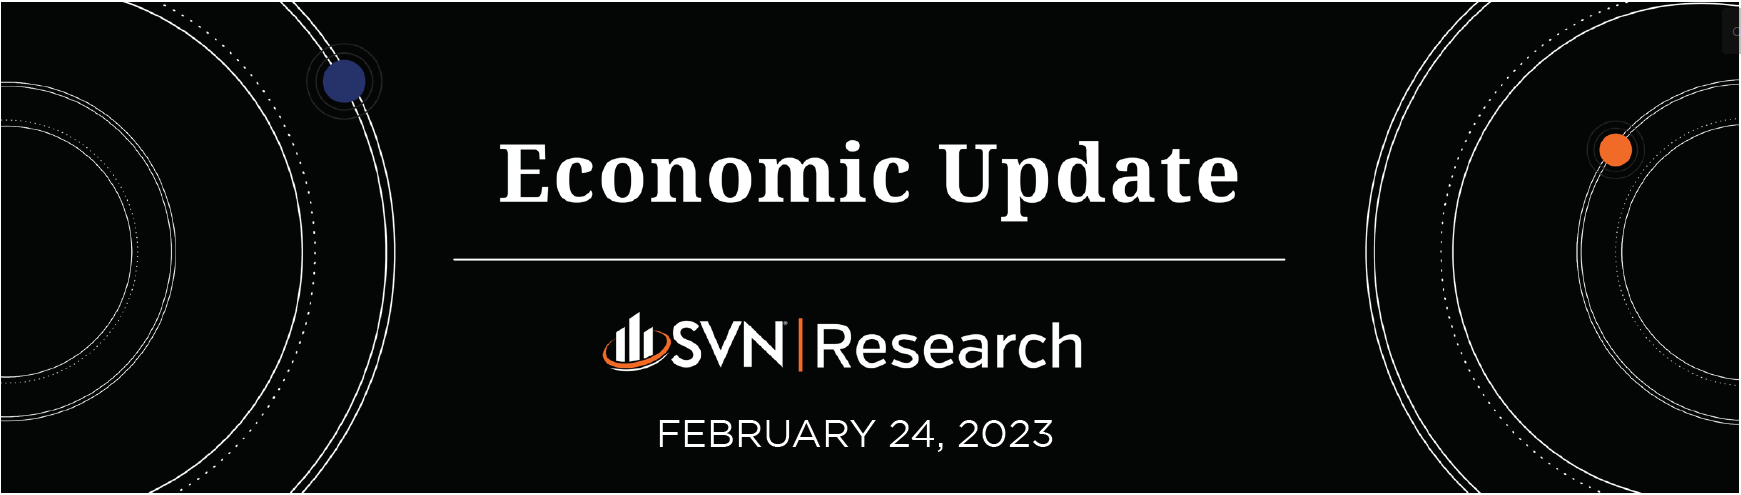 SVN | Research Economic Update 02.24.2023